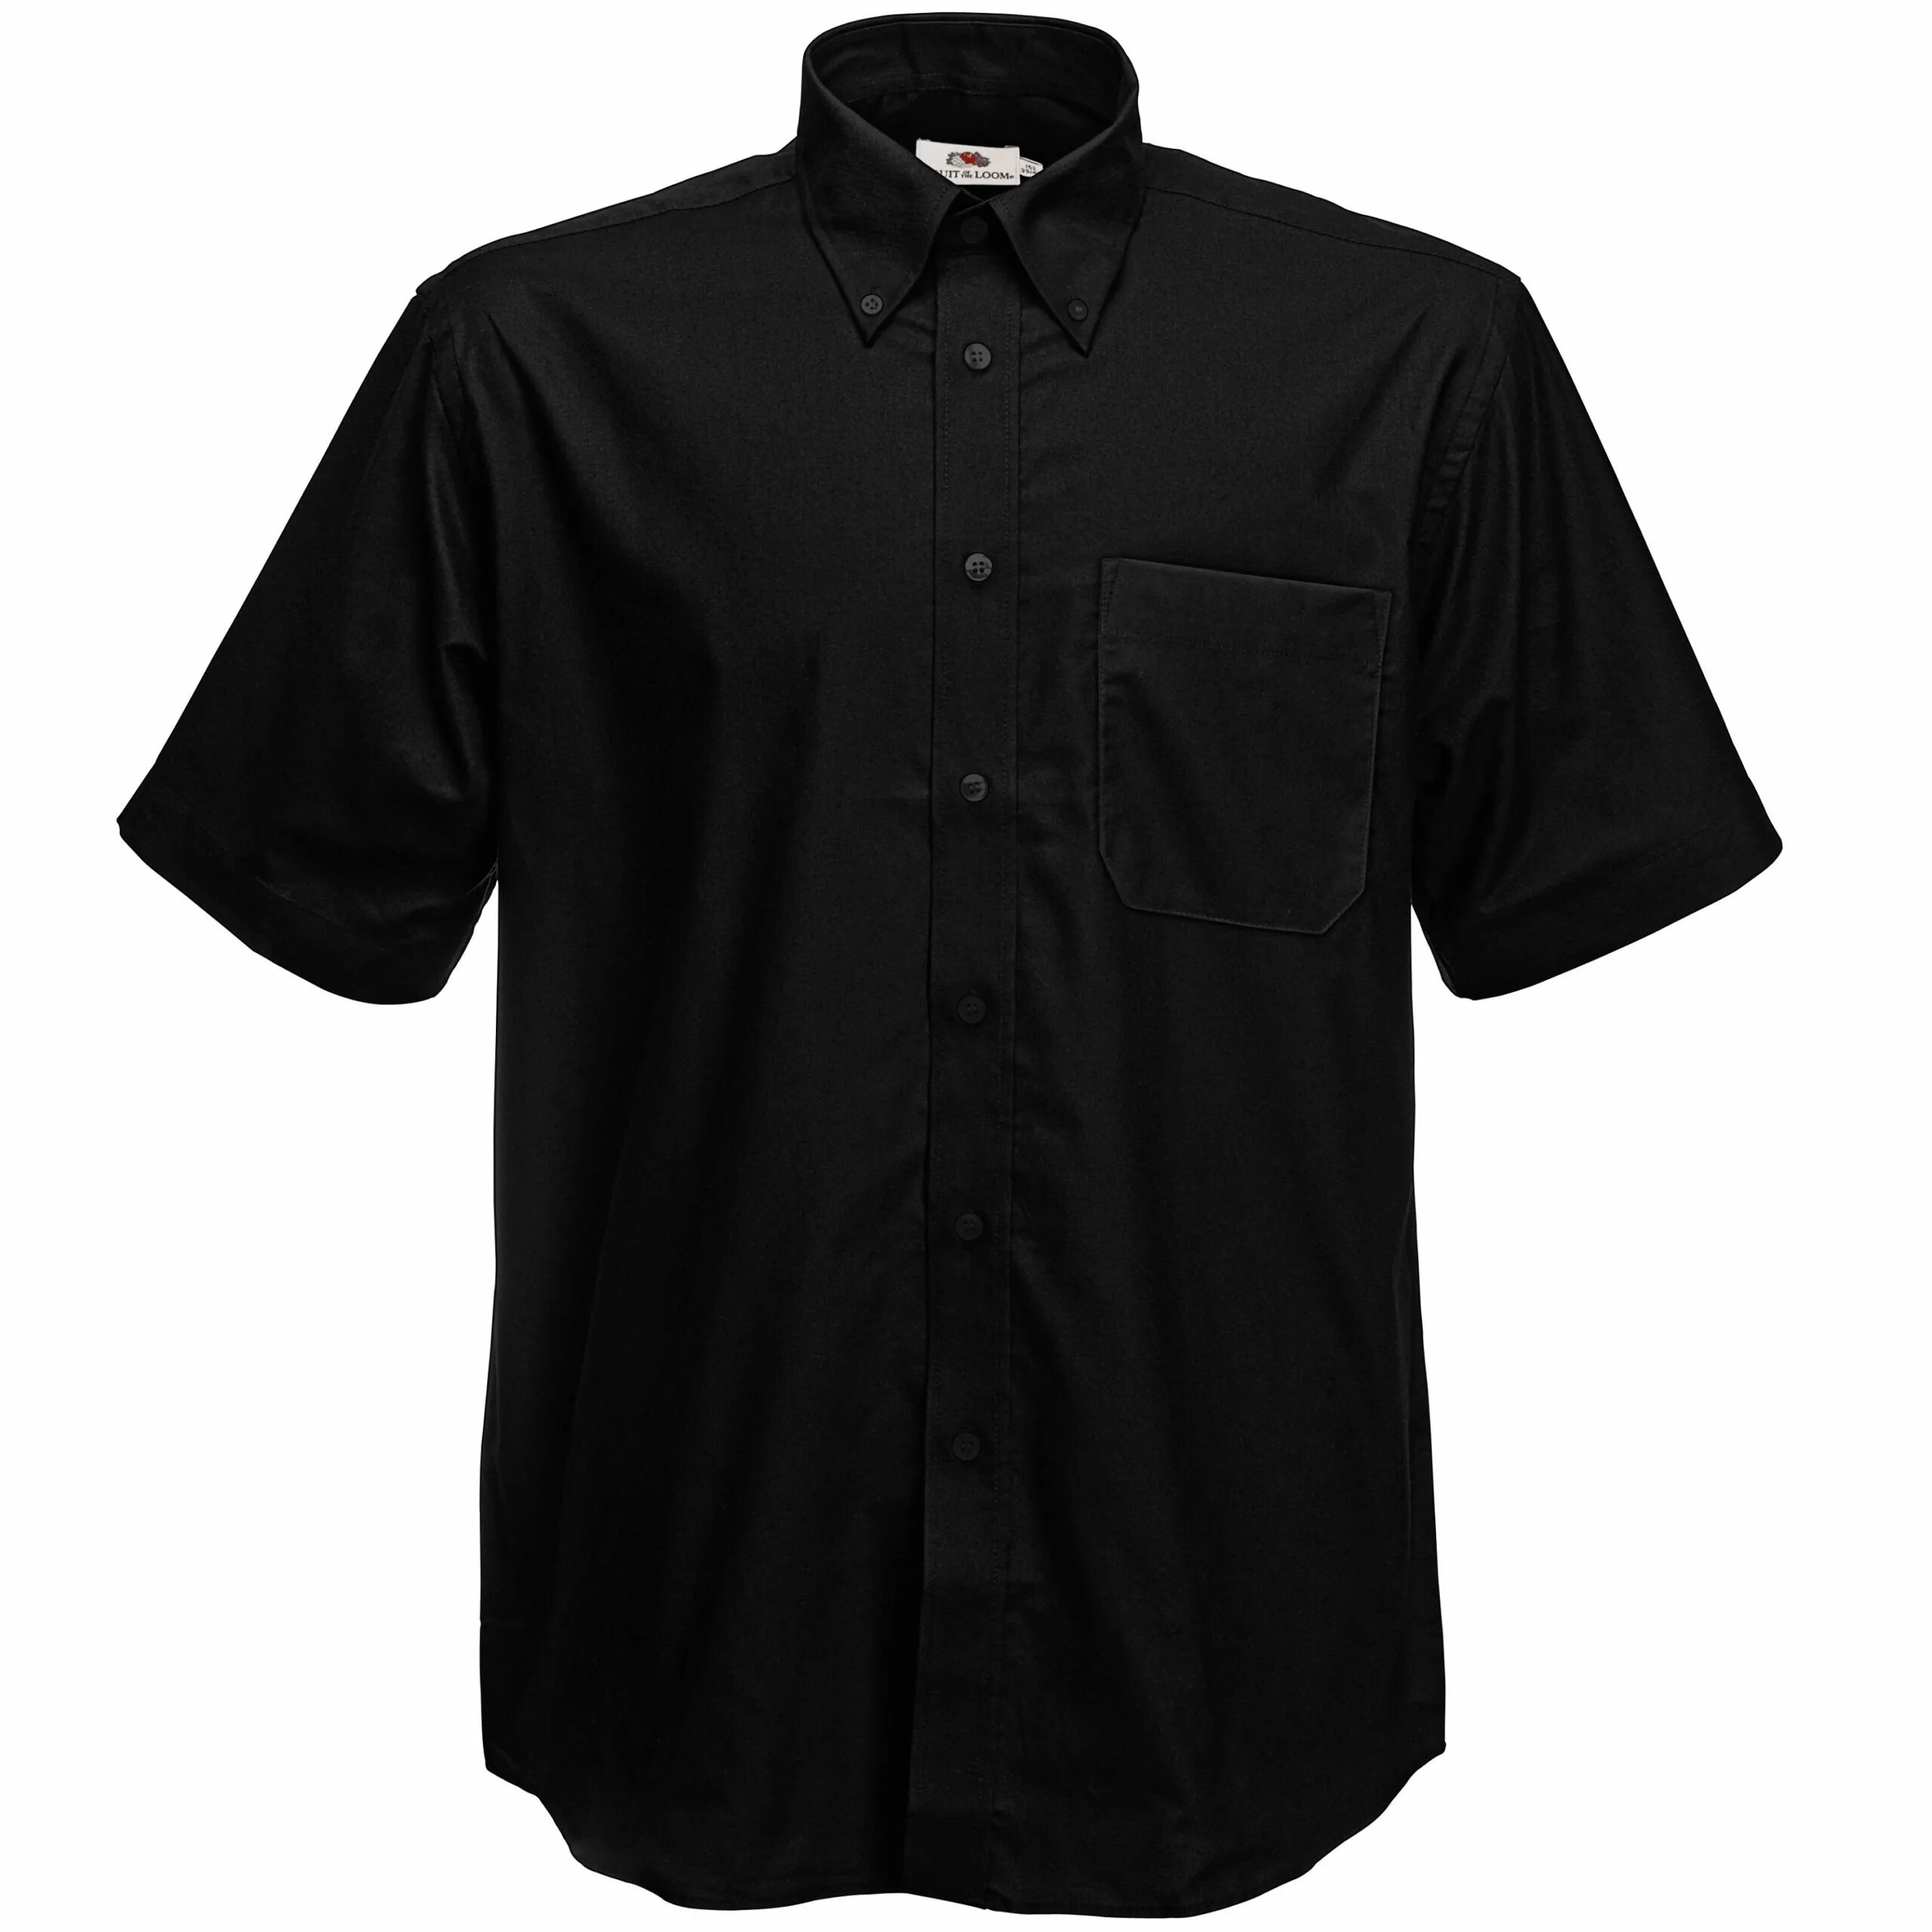 Черная рубаха песня. Черная рубашка. Черная рубашка с коротким рукавом. Черная рубашка с коротким рукавом мужская. Черная рубаха мужская.